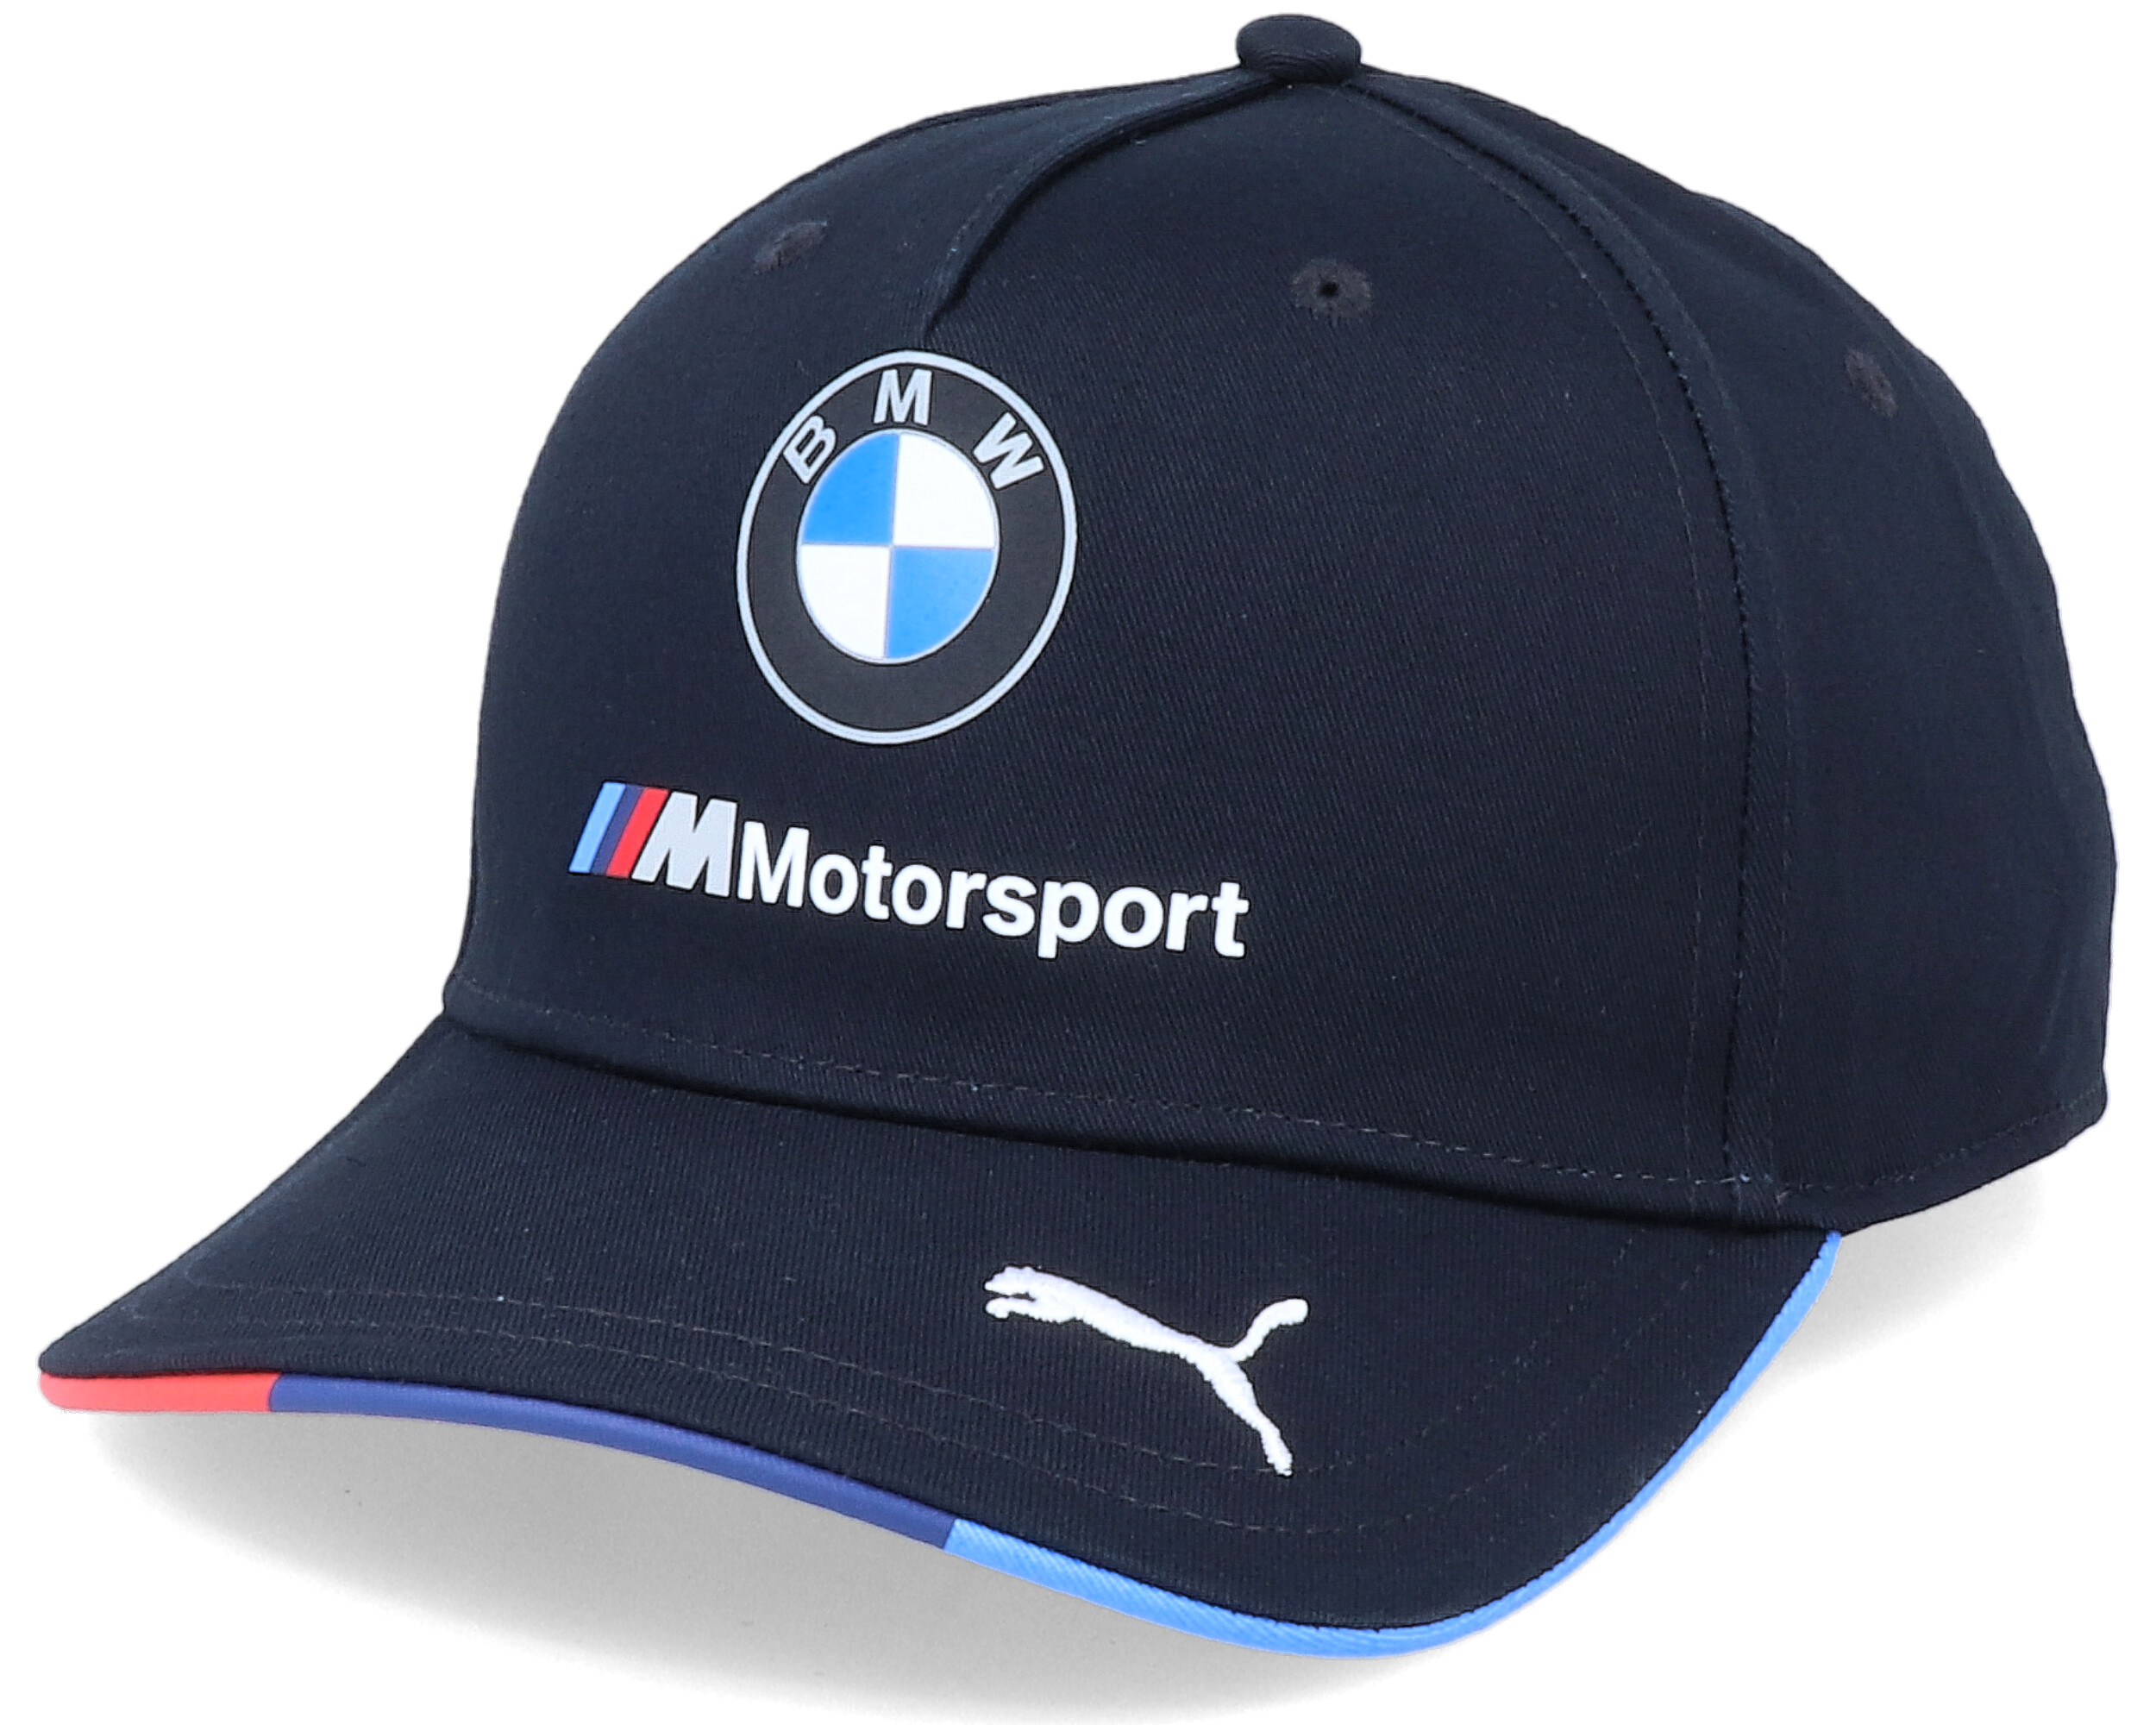 BMW M Motorsport BMW Team Cap - Black Cap Motorsport Adjustable